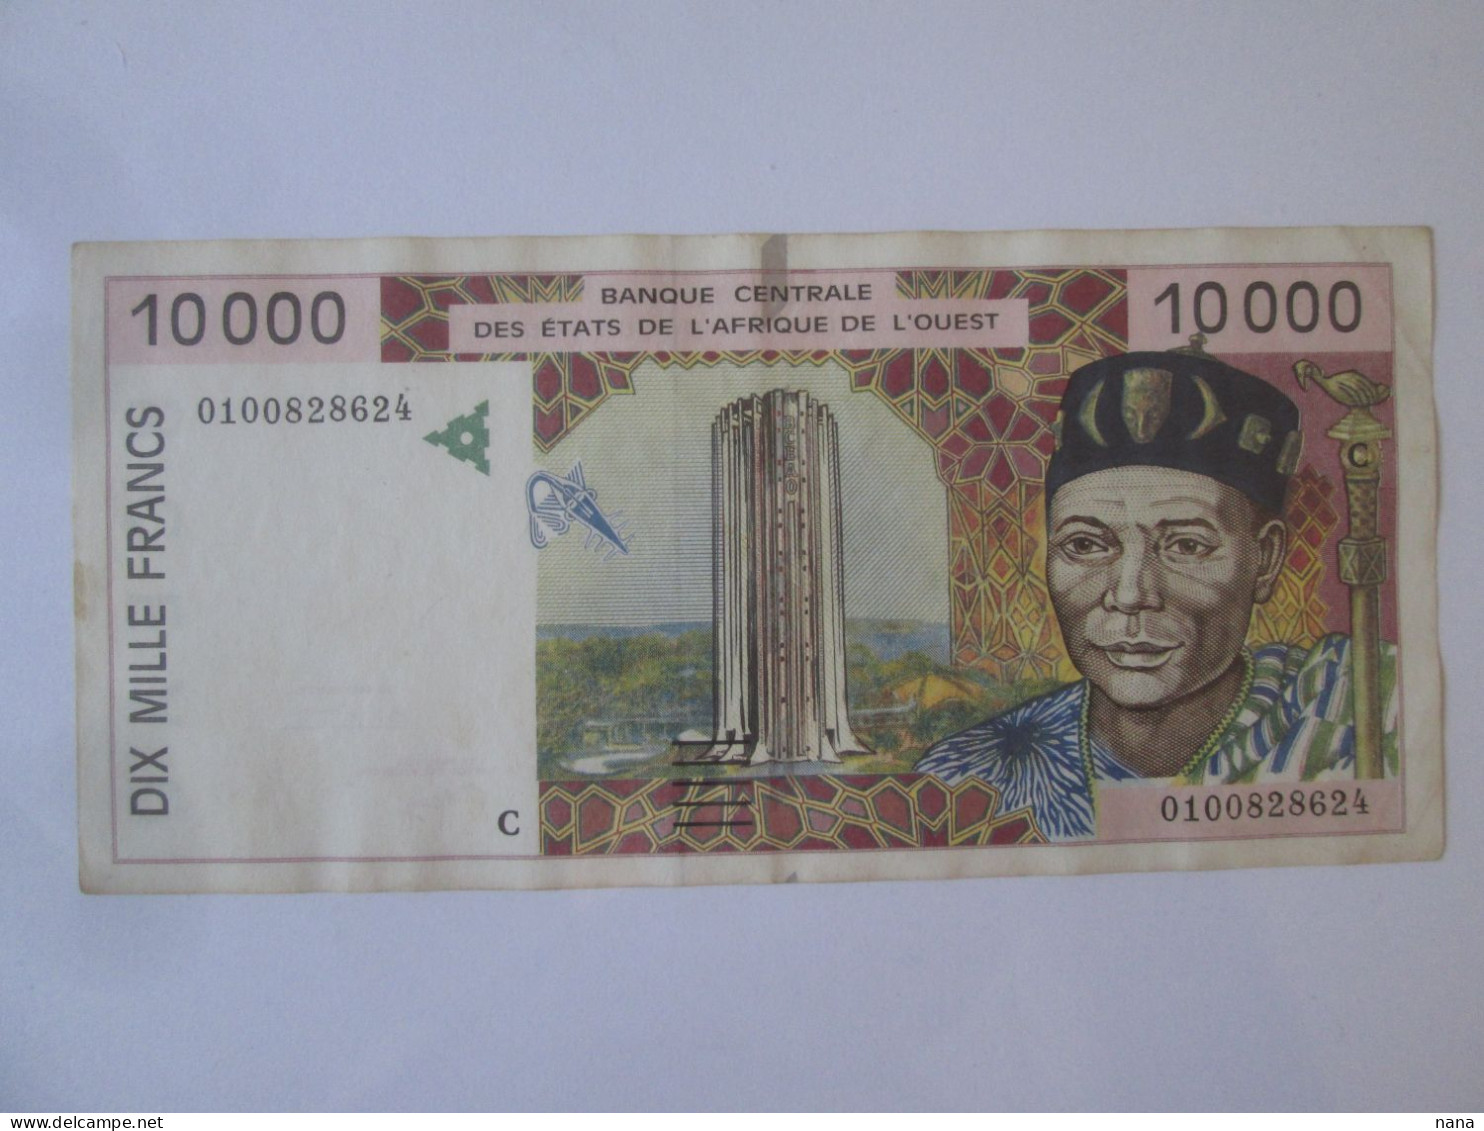 Burkina Faso 10000 Francs 1995 Banknote,see Pictures - Burkina Faso